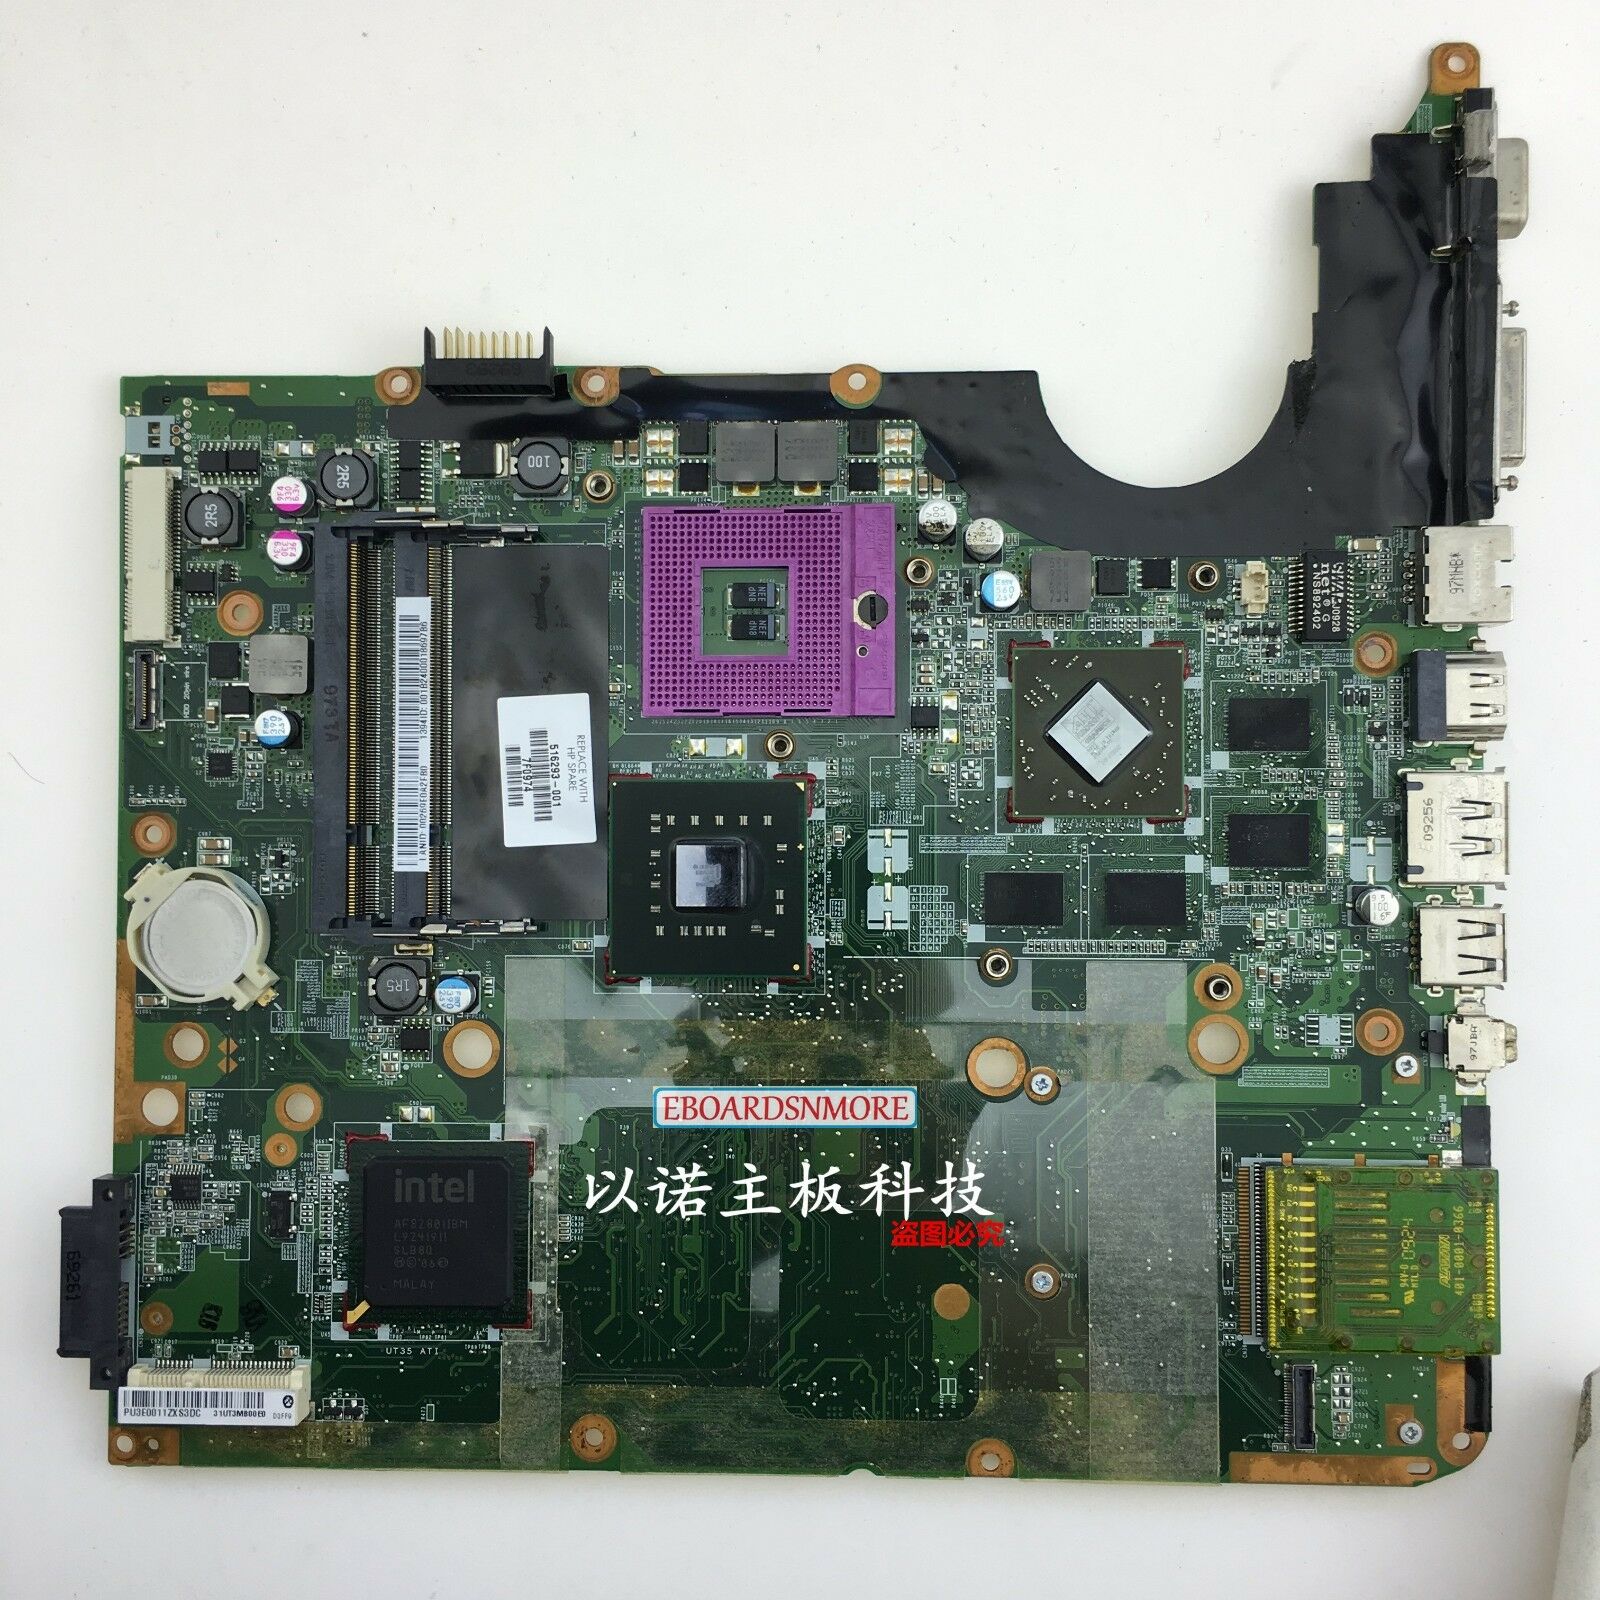 516293-001 INTEL PM45 DDR2 Motherboard for HP DV7 DV7-2000 Laptop, A Socket Type: See Description Number o